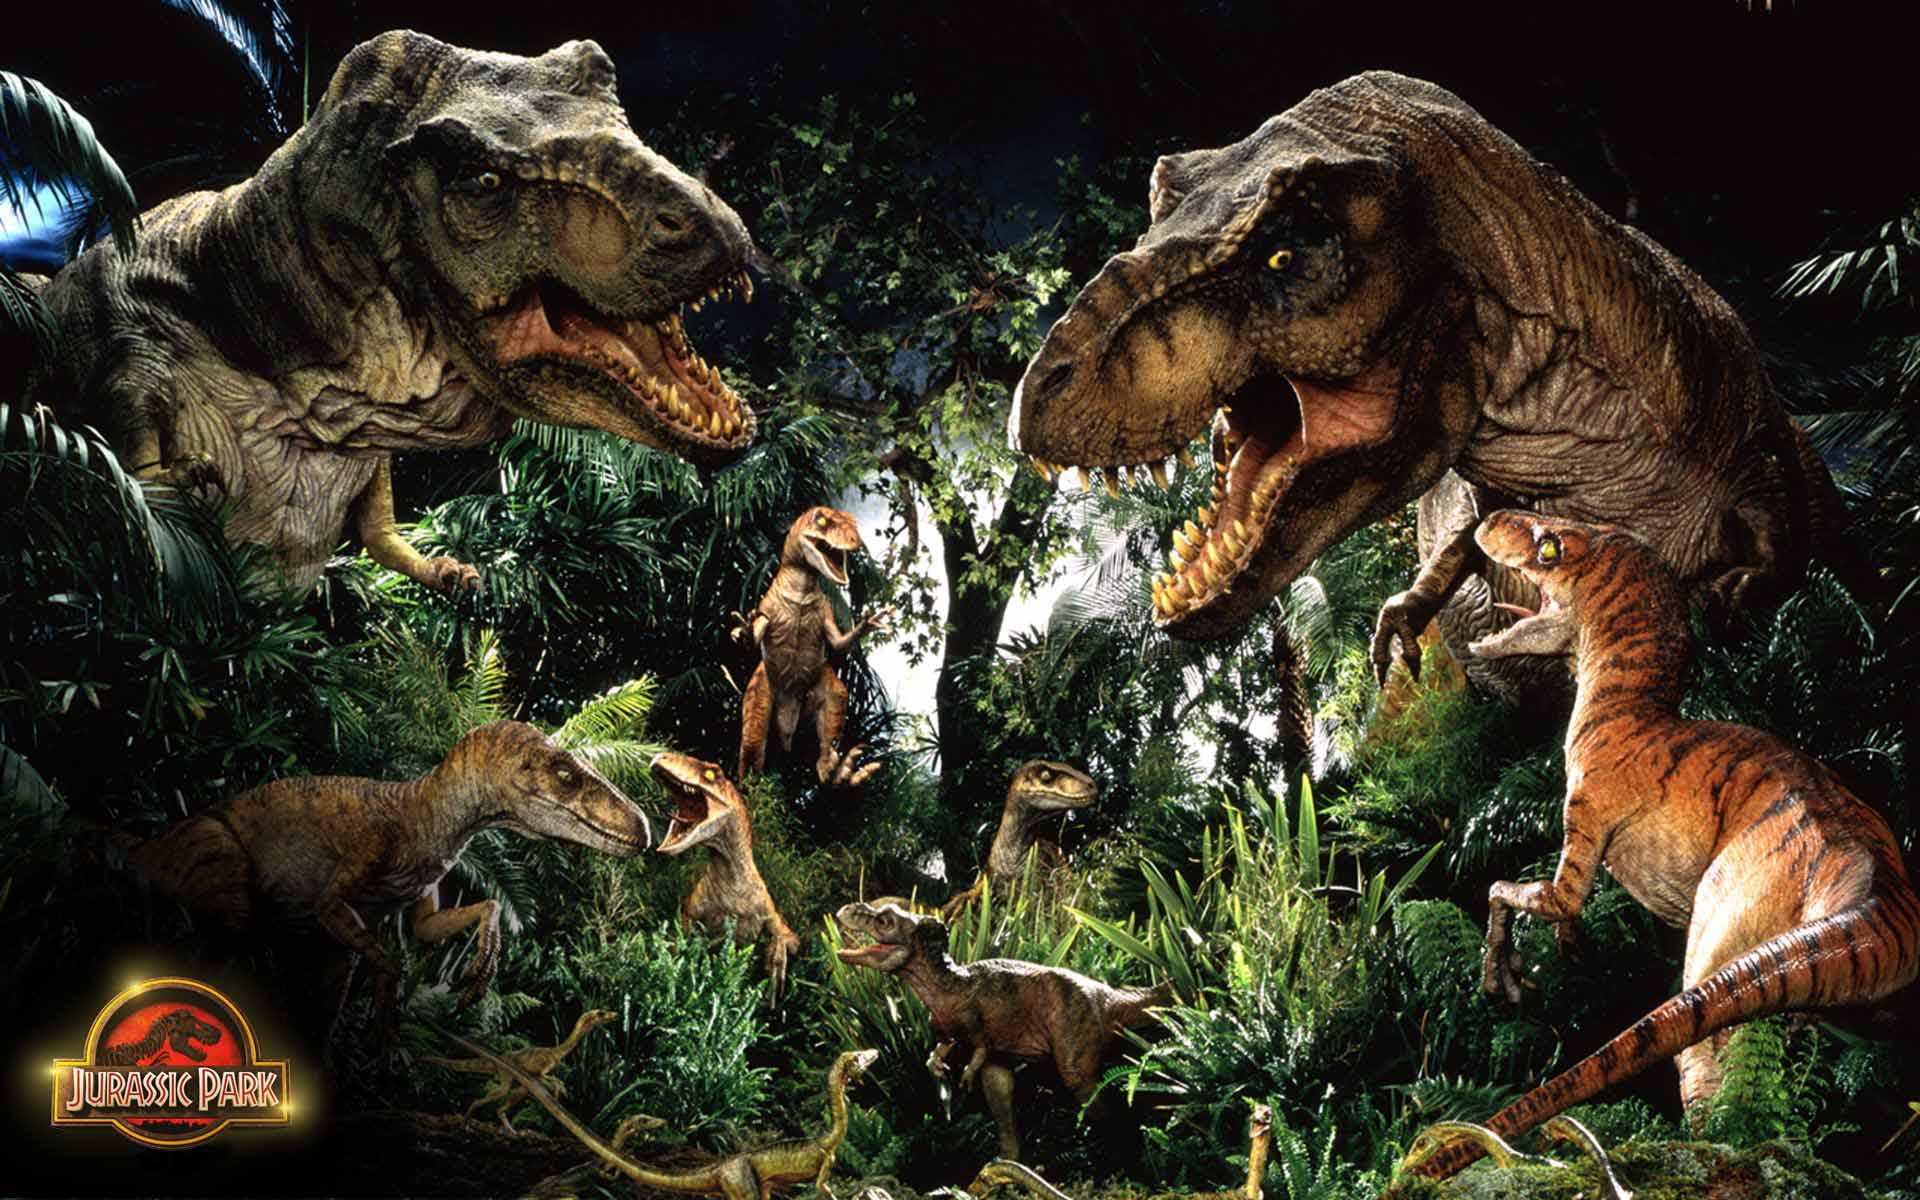 Jurassic World Poster HD Wallpaper